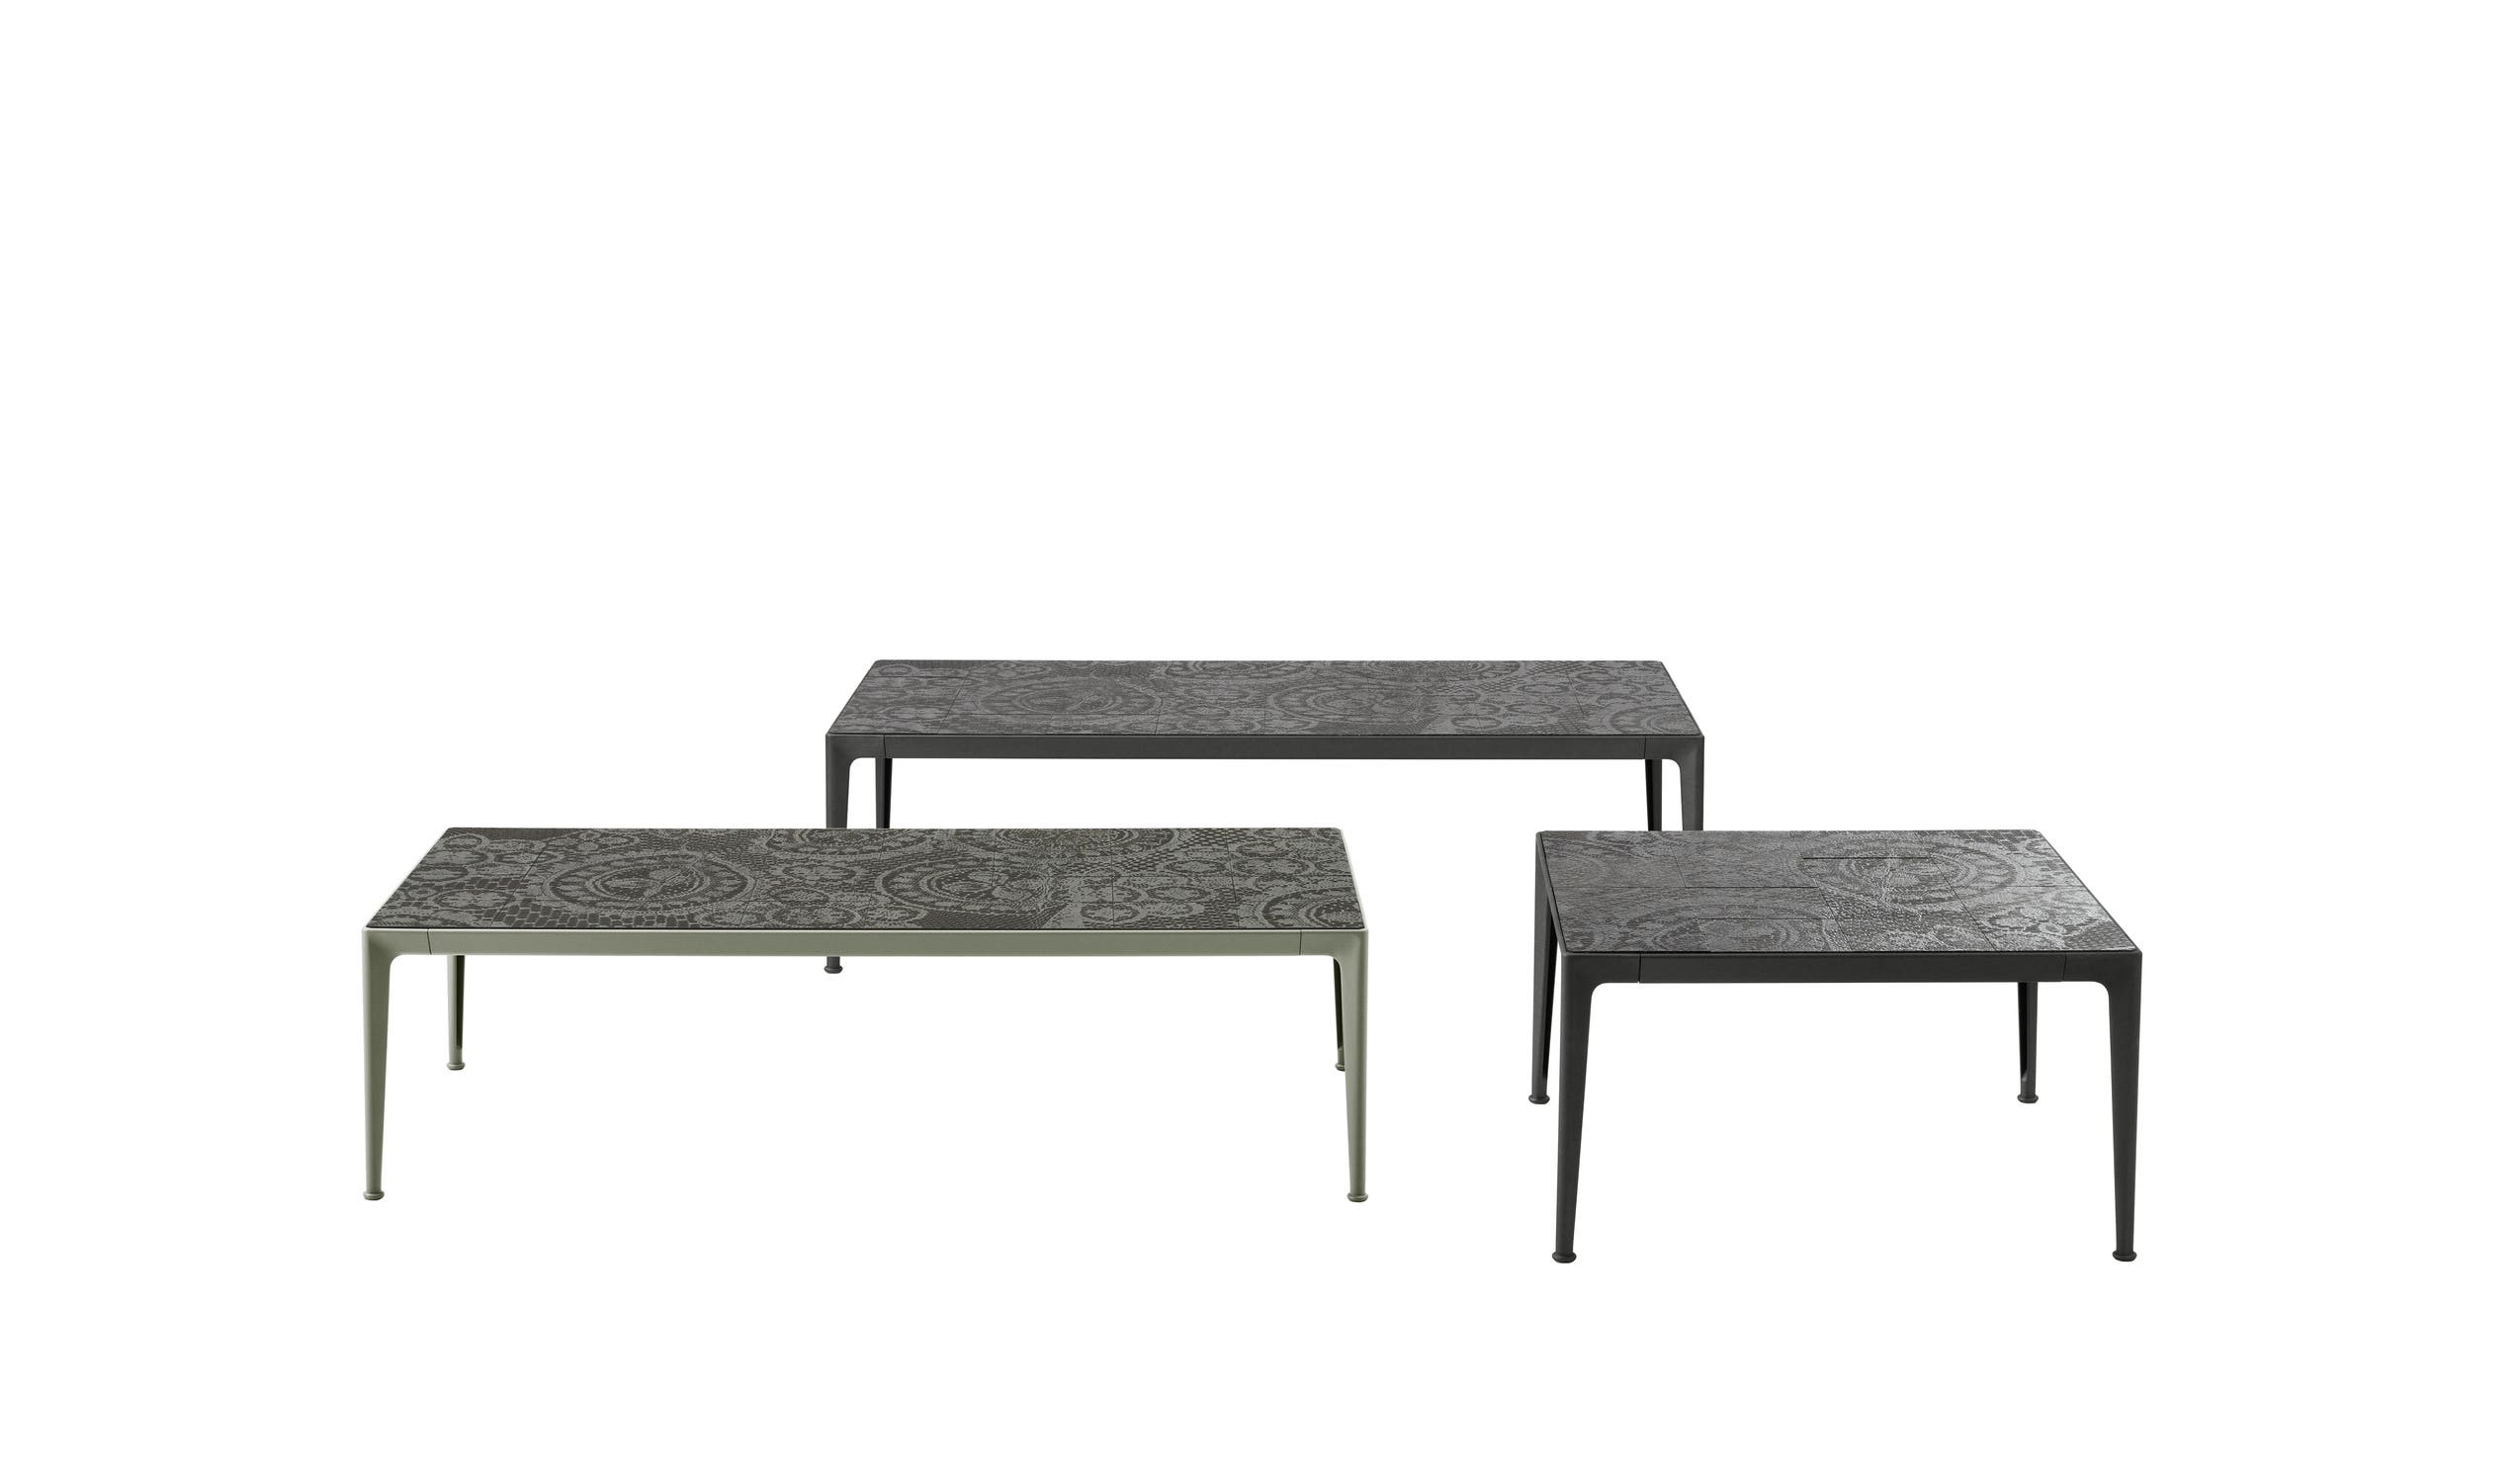 Designer italian modern small tables  - Mirto Outdoor Small tables 1